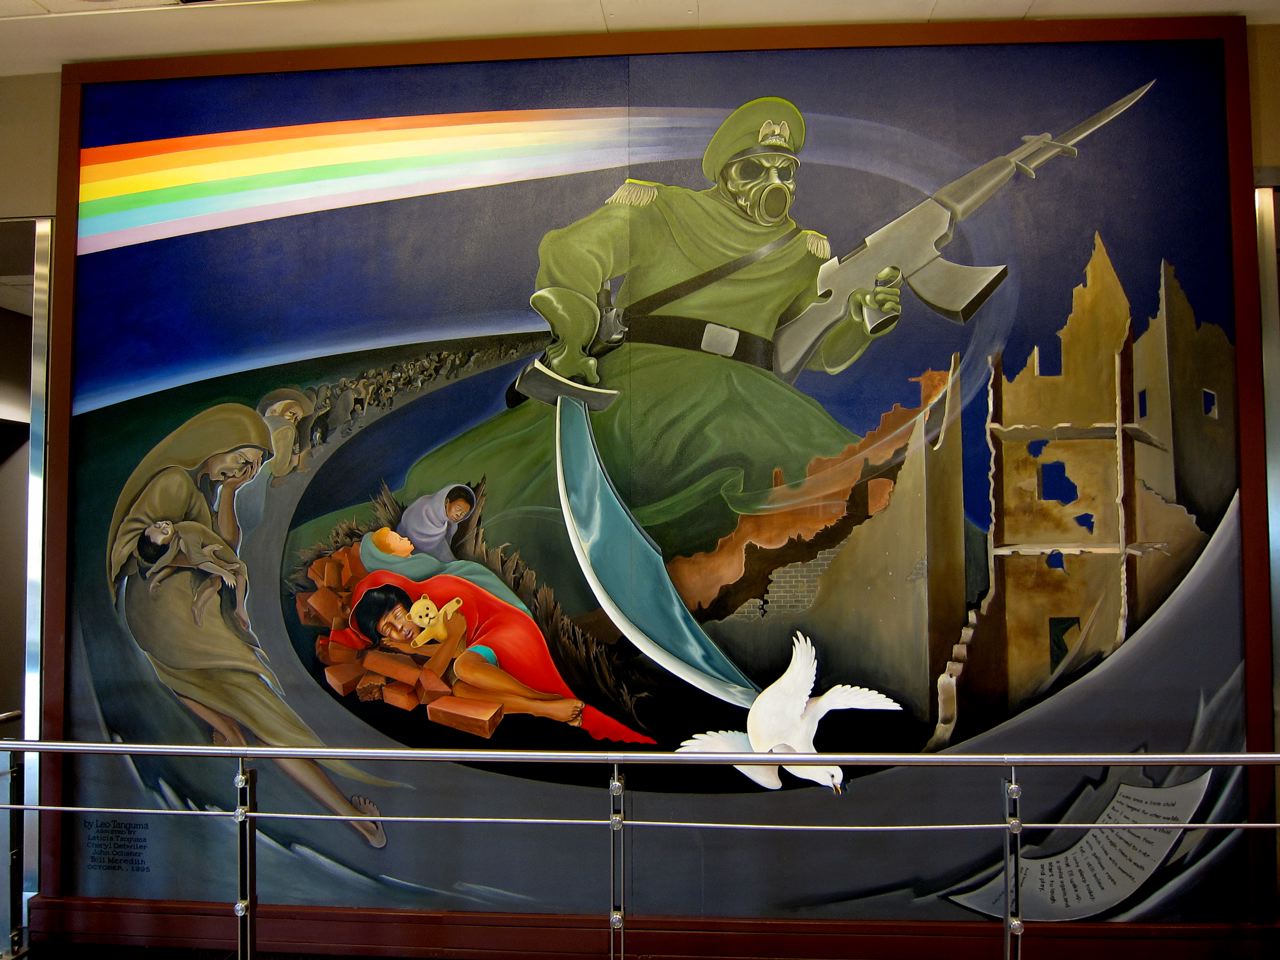 Denver Airport Art Explained